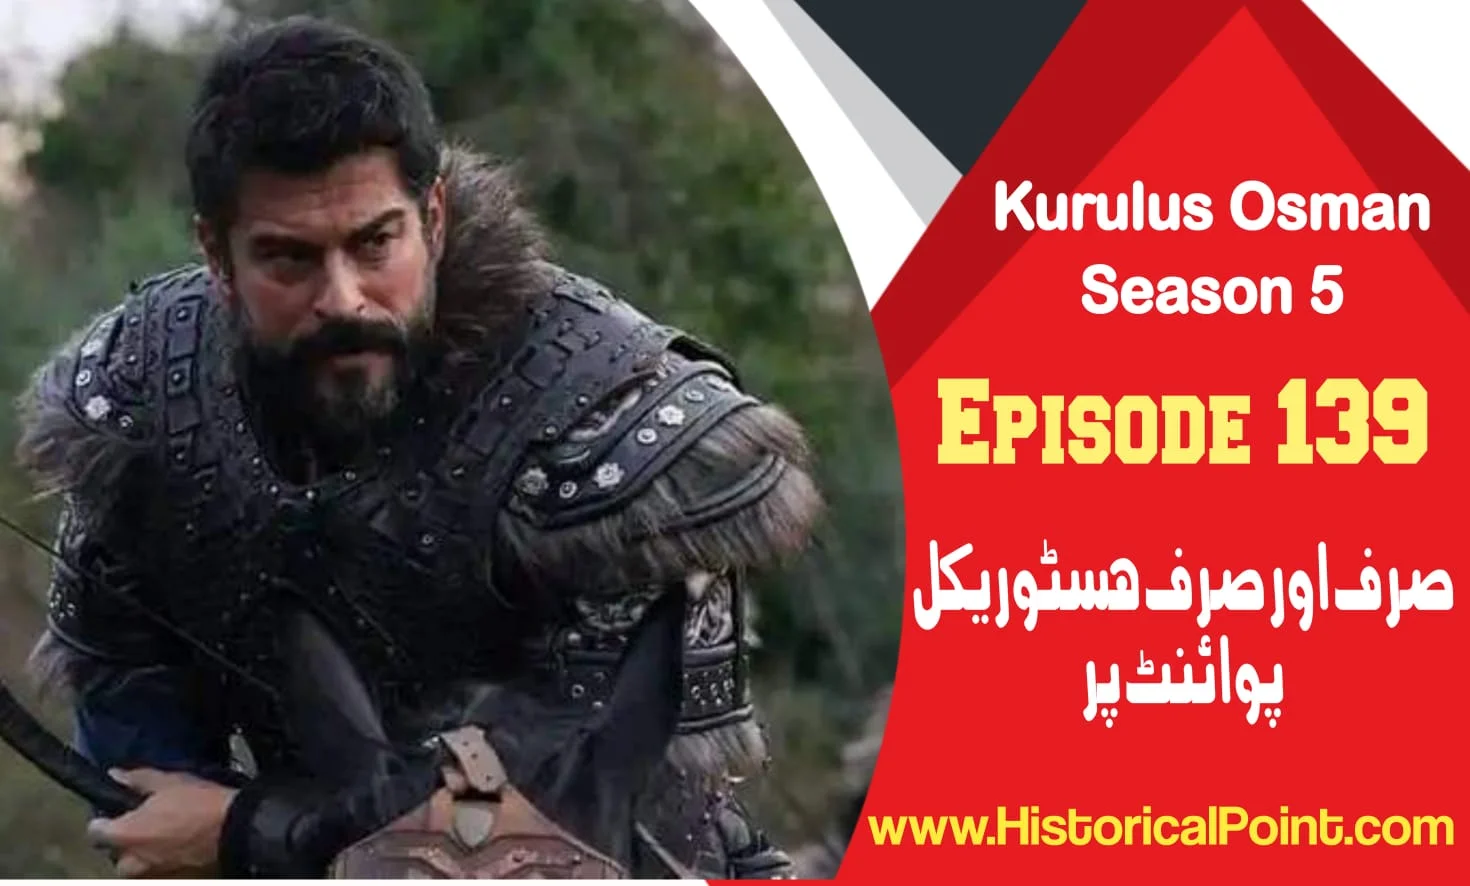 Kurulus Osman Episode 139 with Urdu Subtitles